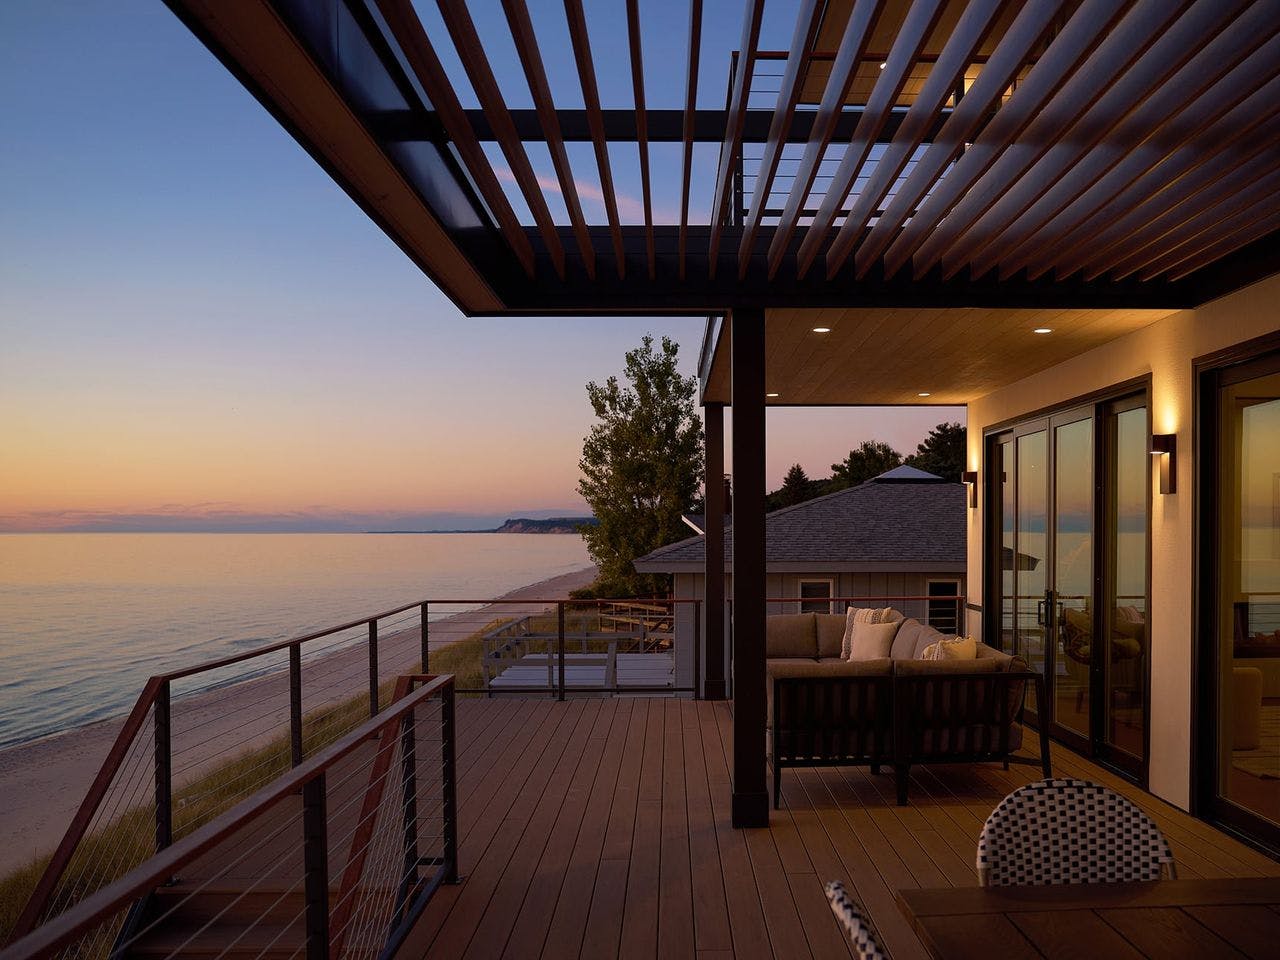 Lake Michigan Beach House deck